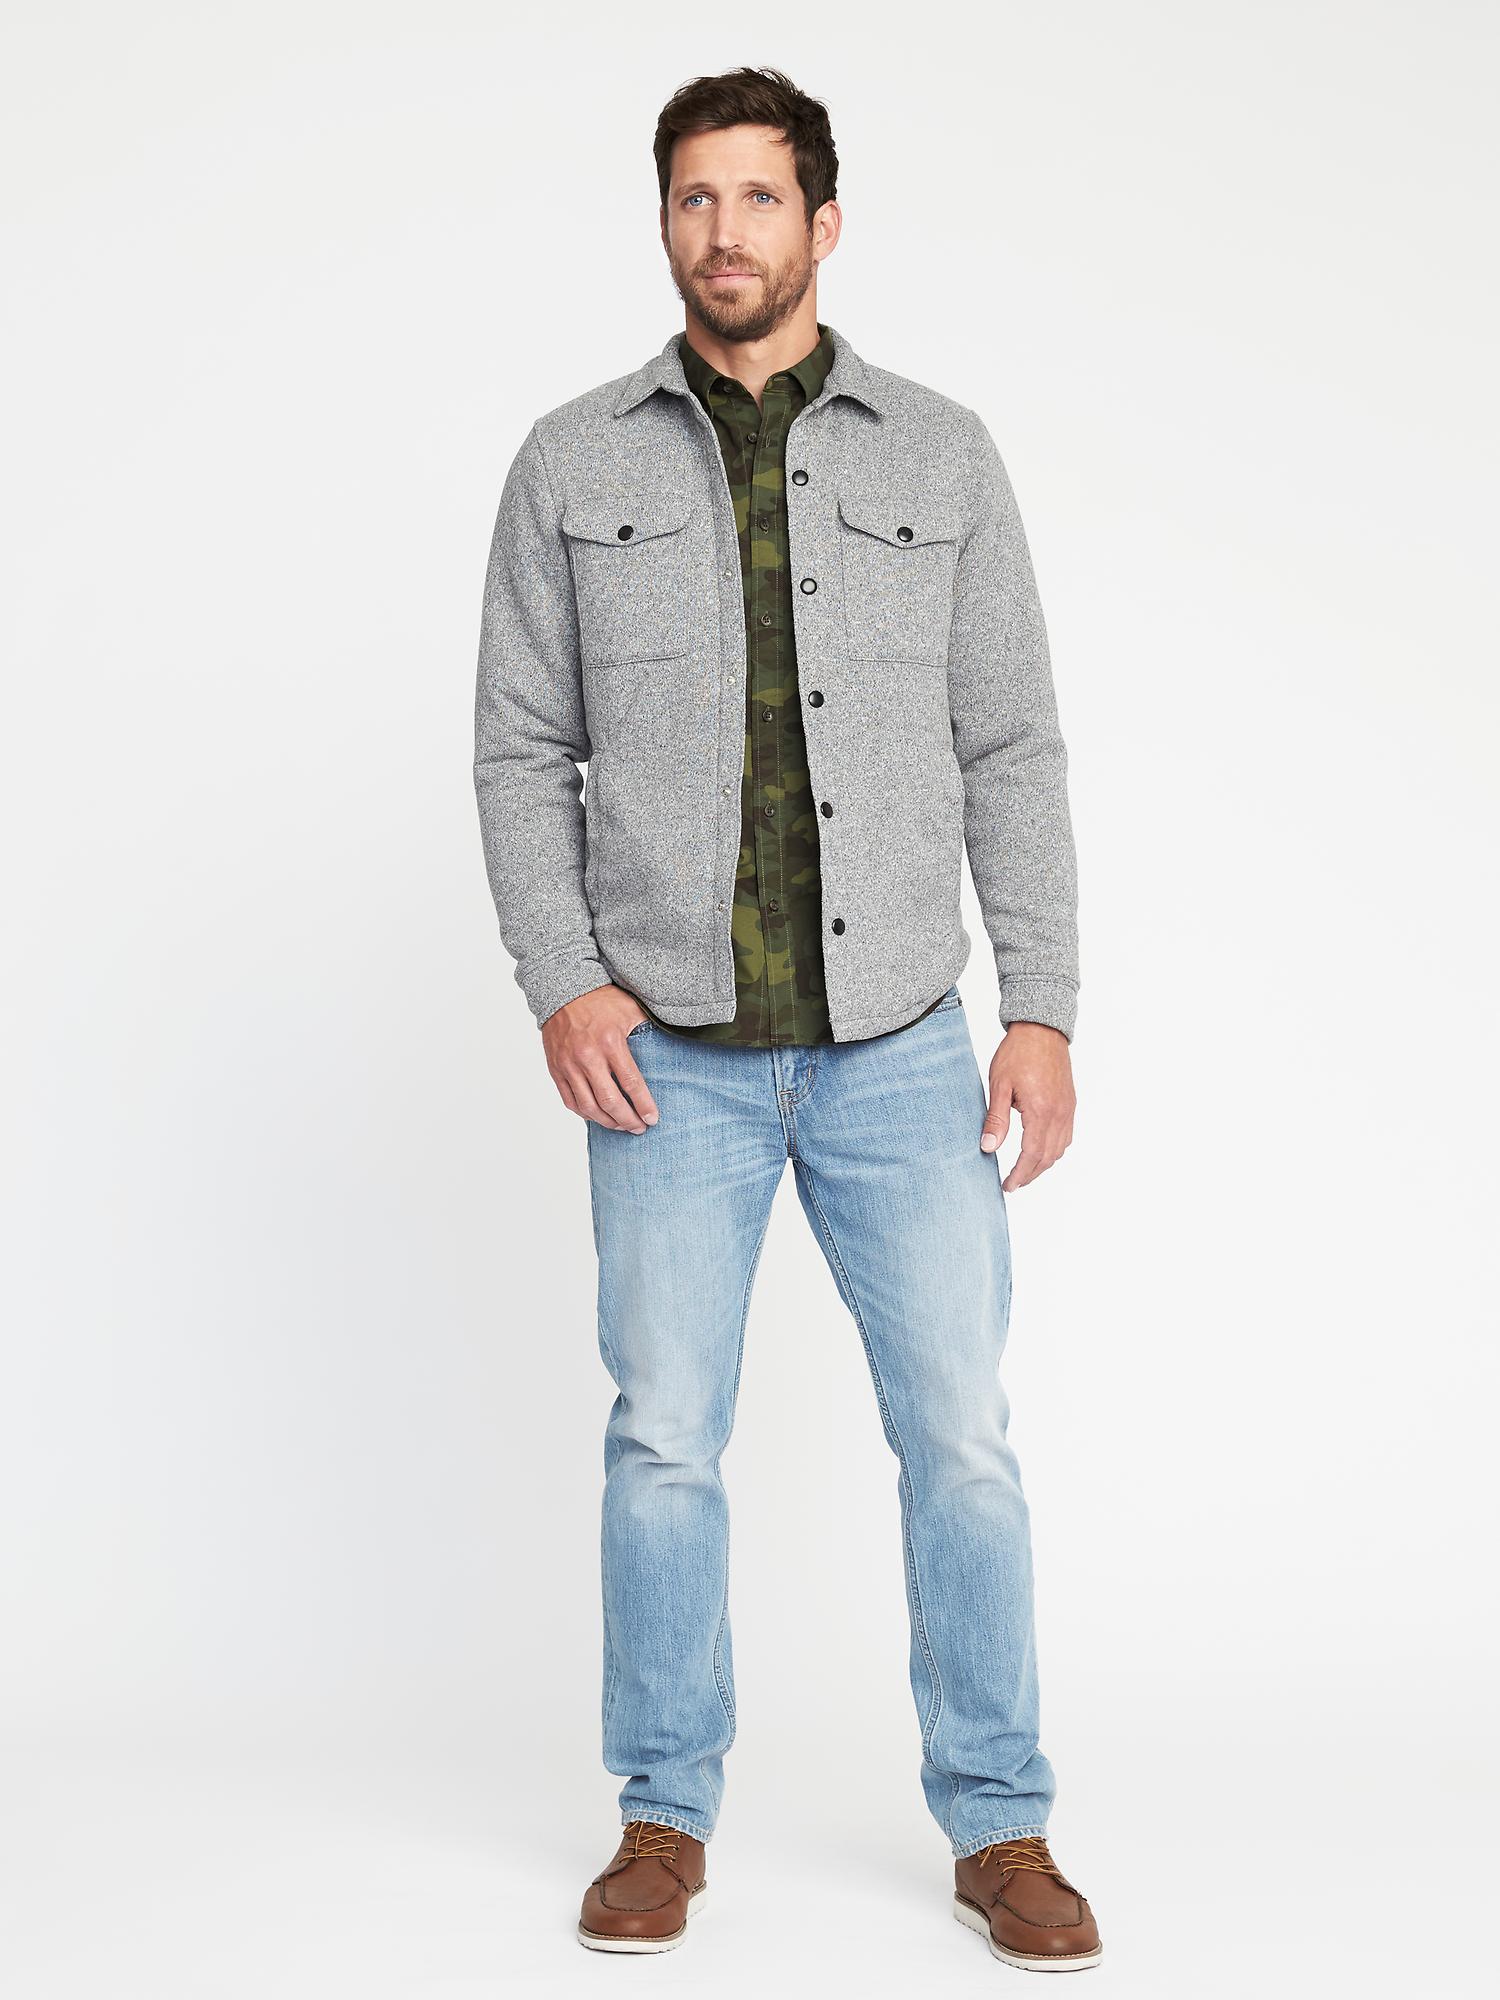 Sweater-Fleece Shirt Jacket for Men | Old Navy